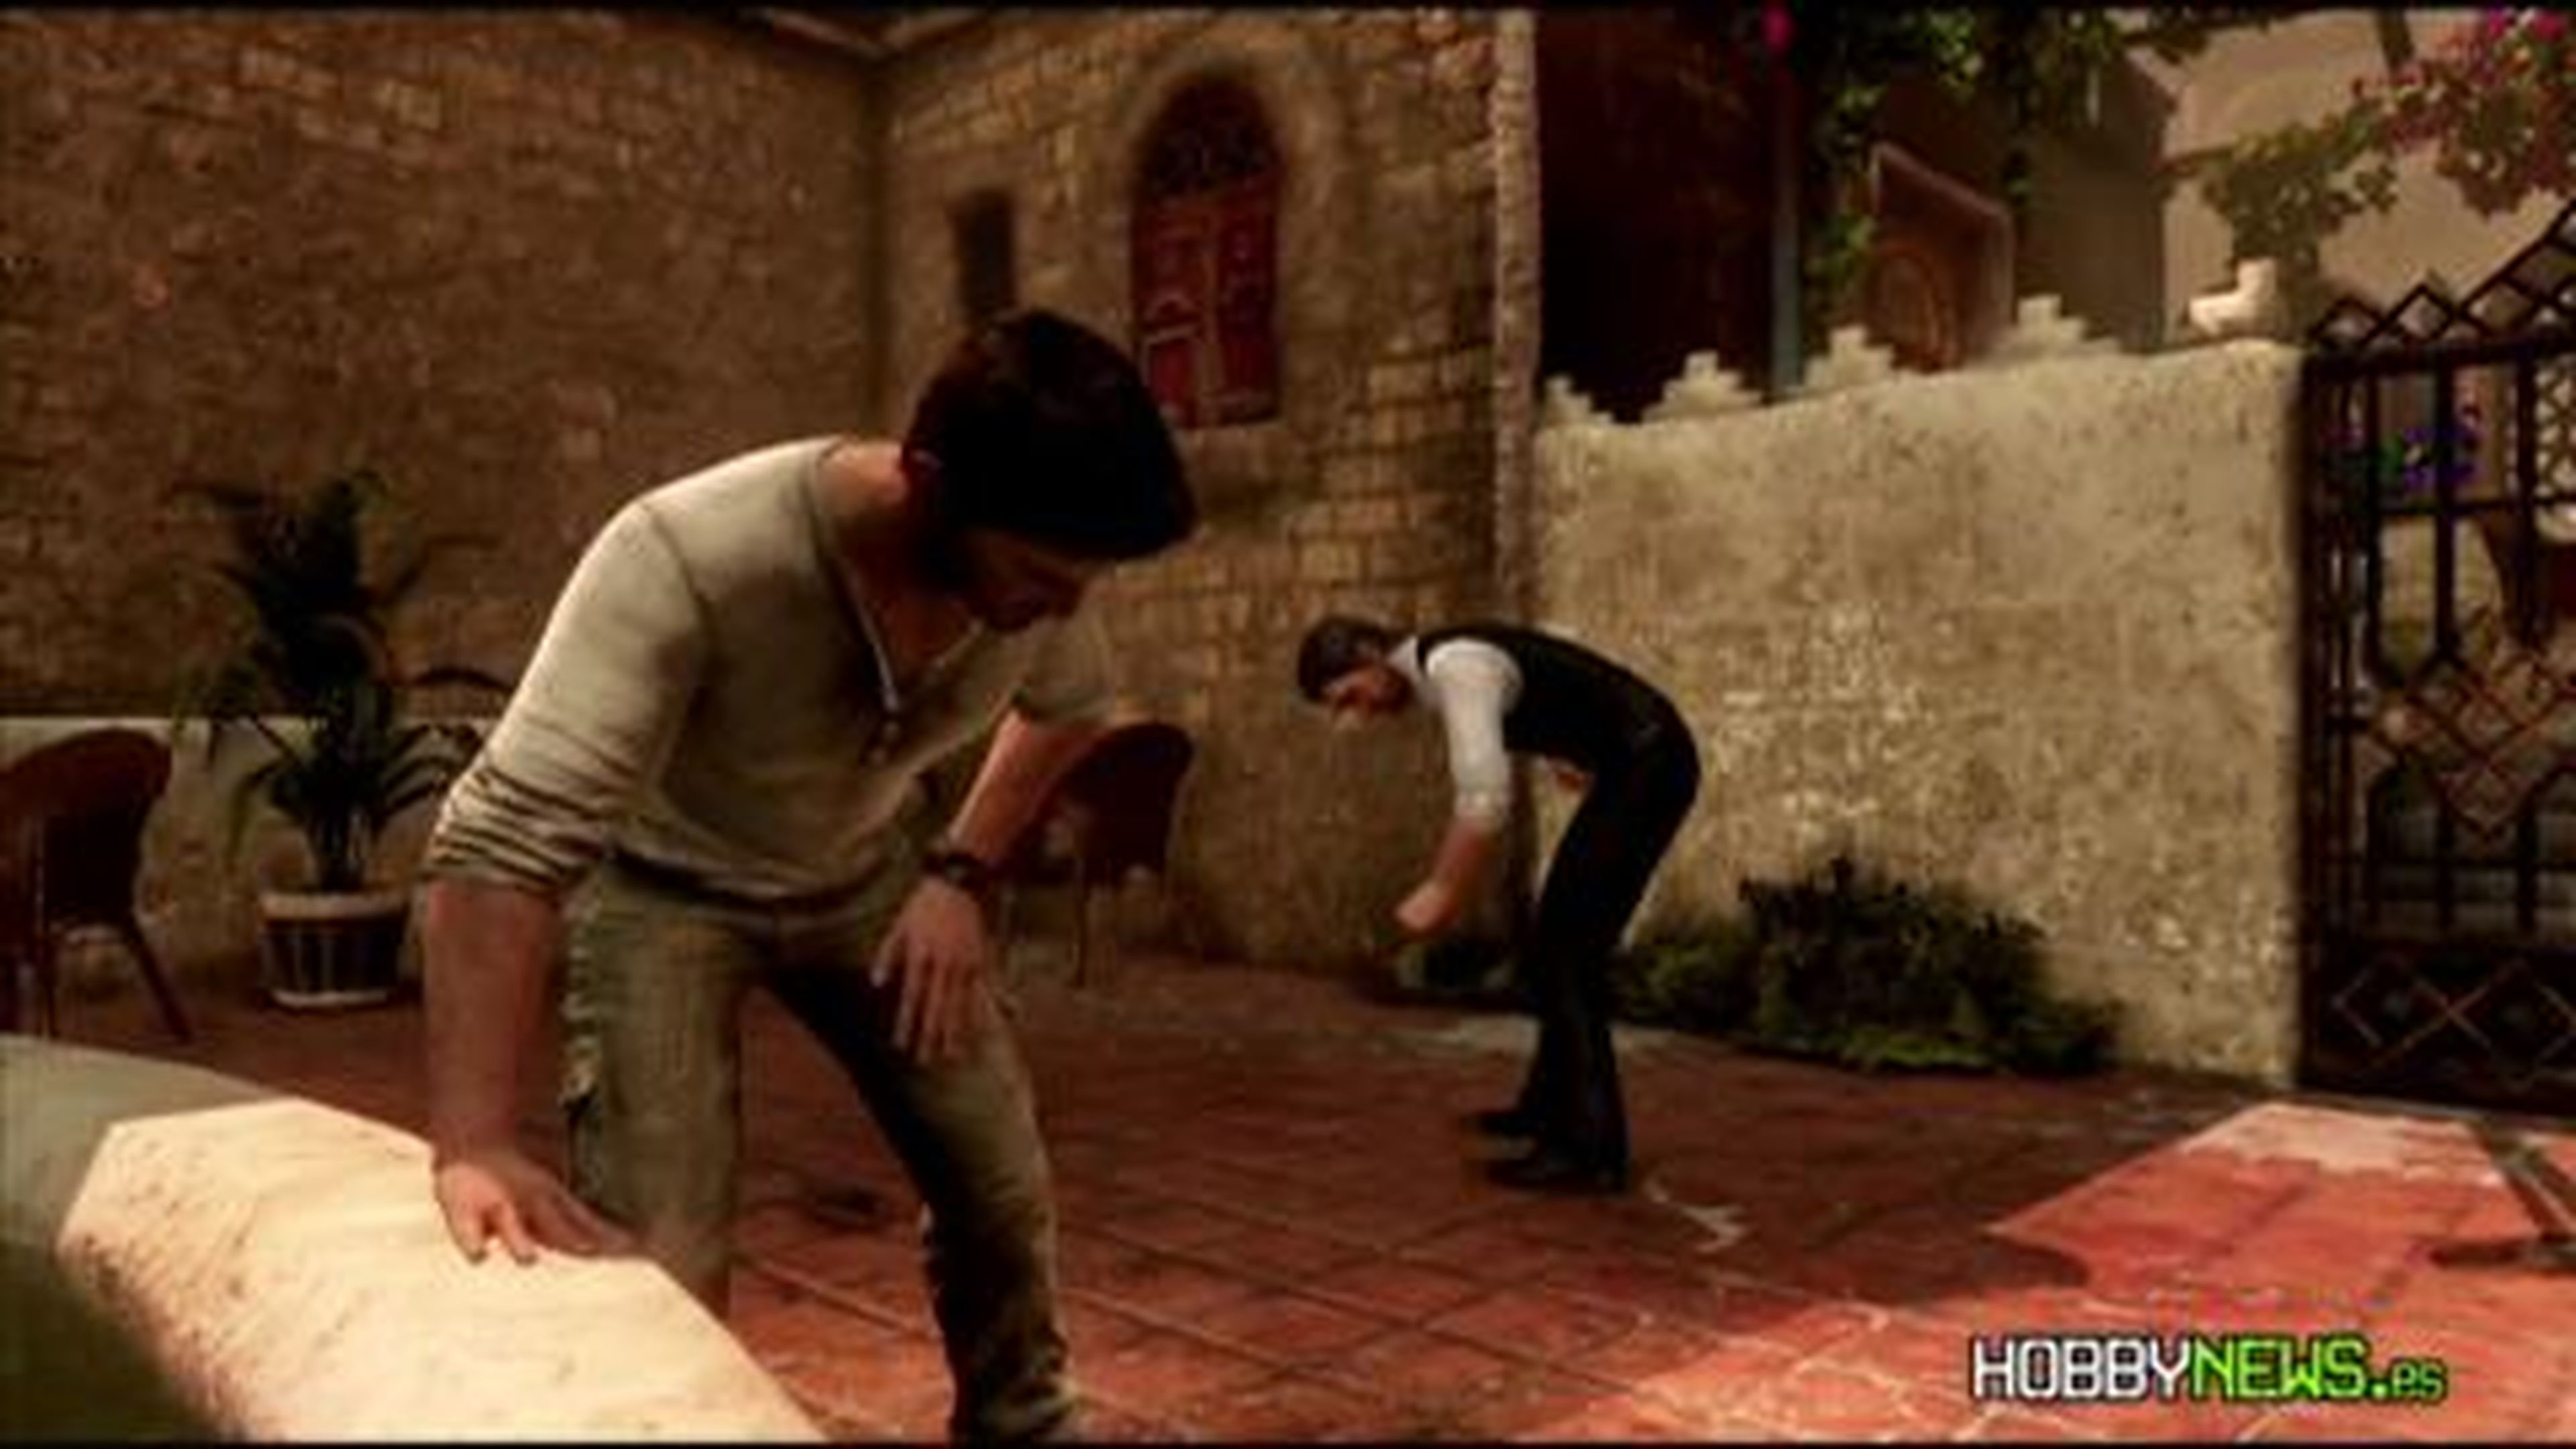 Uncharted 3 - Videoreview en HobbyNews.es